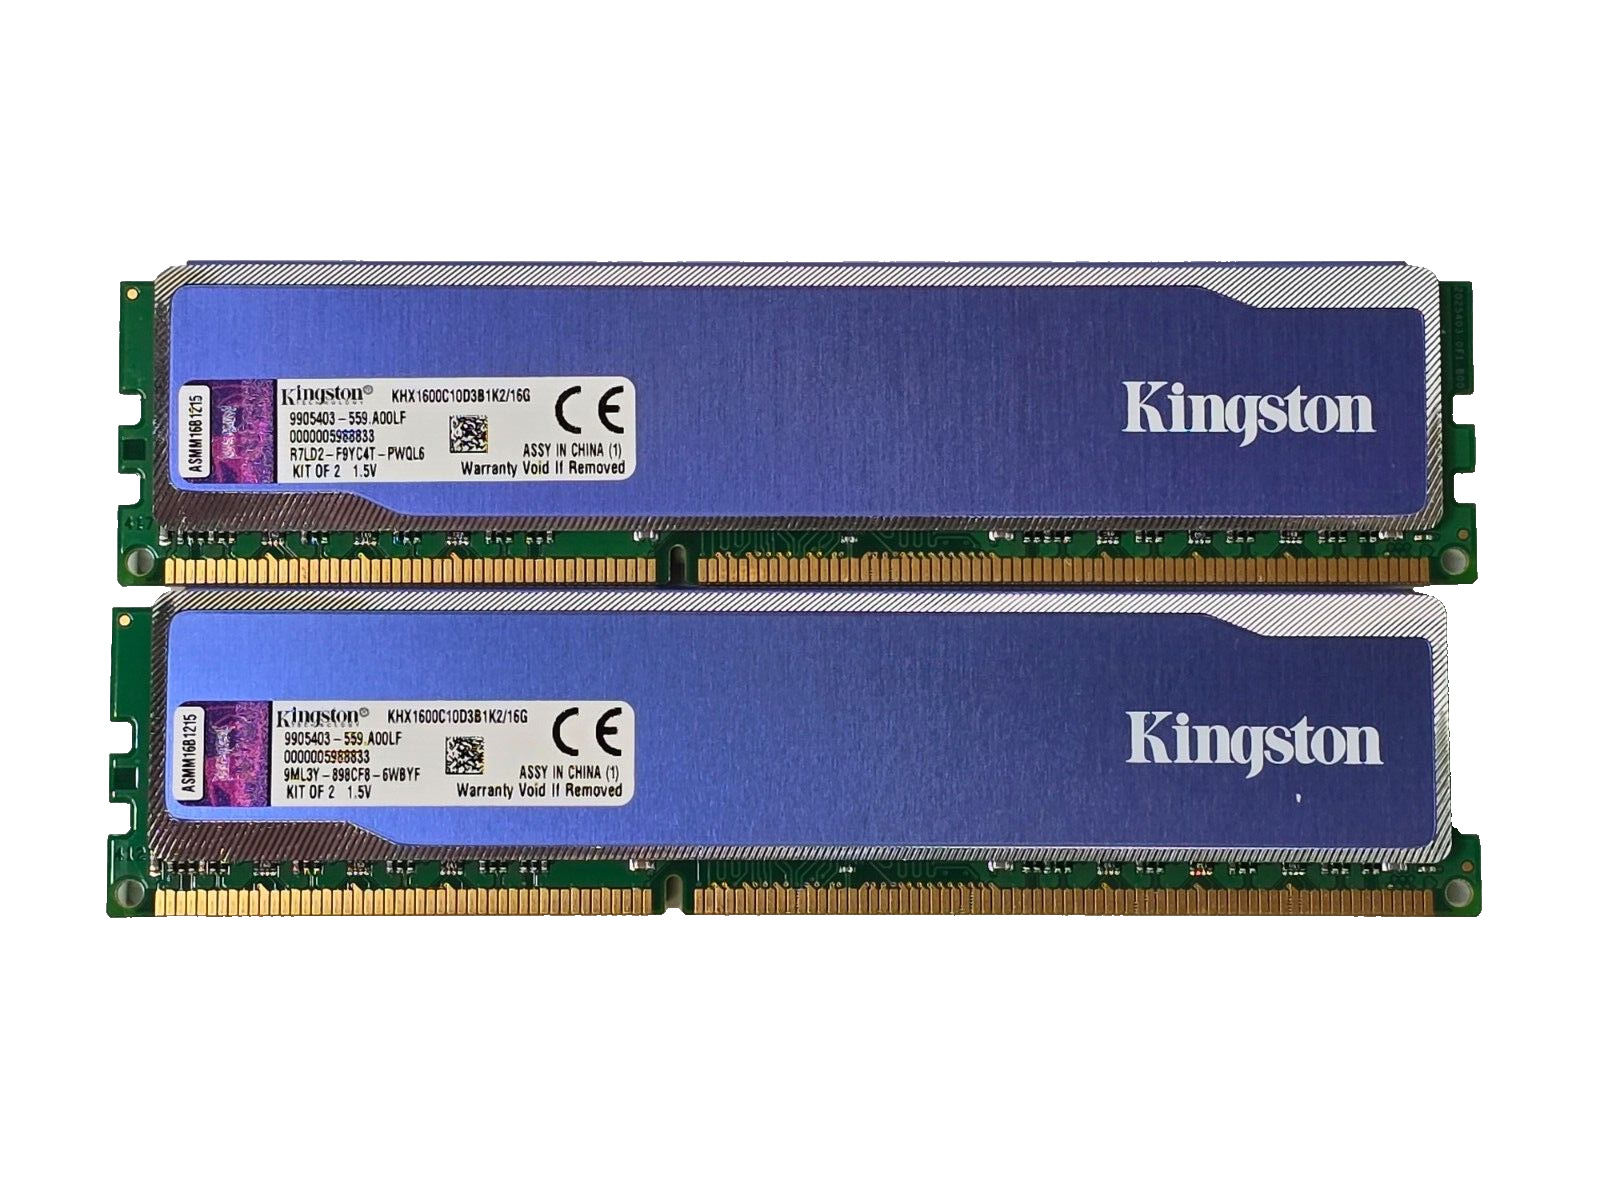 (2 Piece) Kingston HyperX Blu KHX1600C10D3B1K2/16G DDR3-1600 16GB (2x8GB) RAM